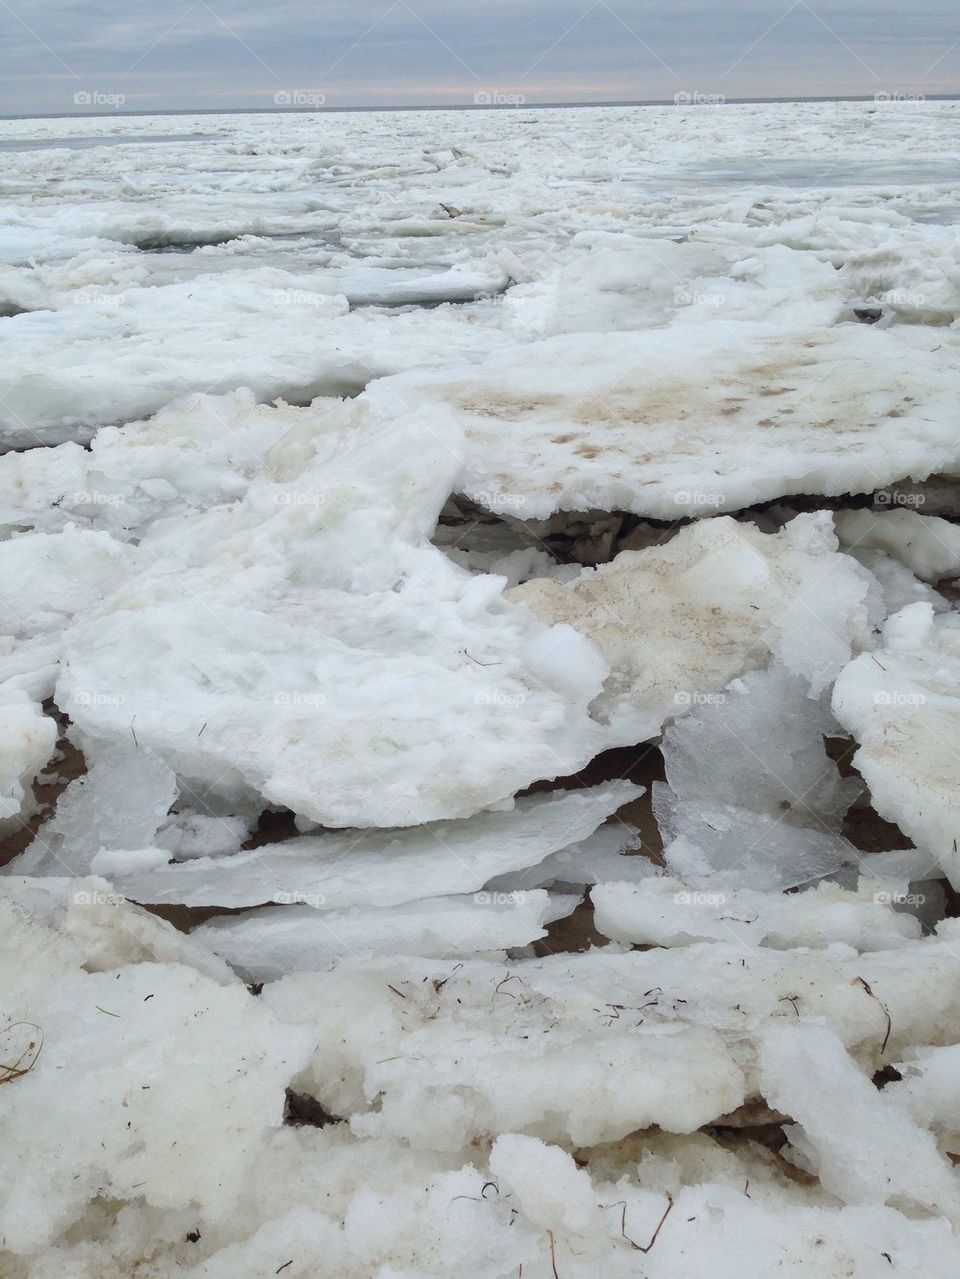 Chunks of ice 